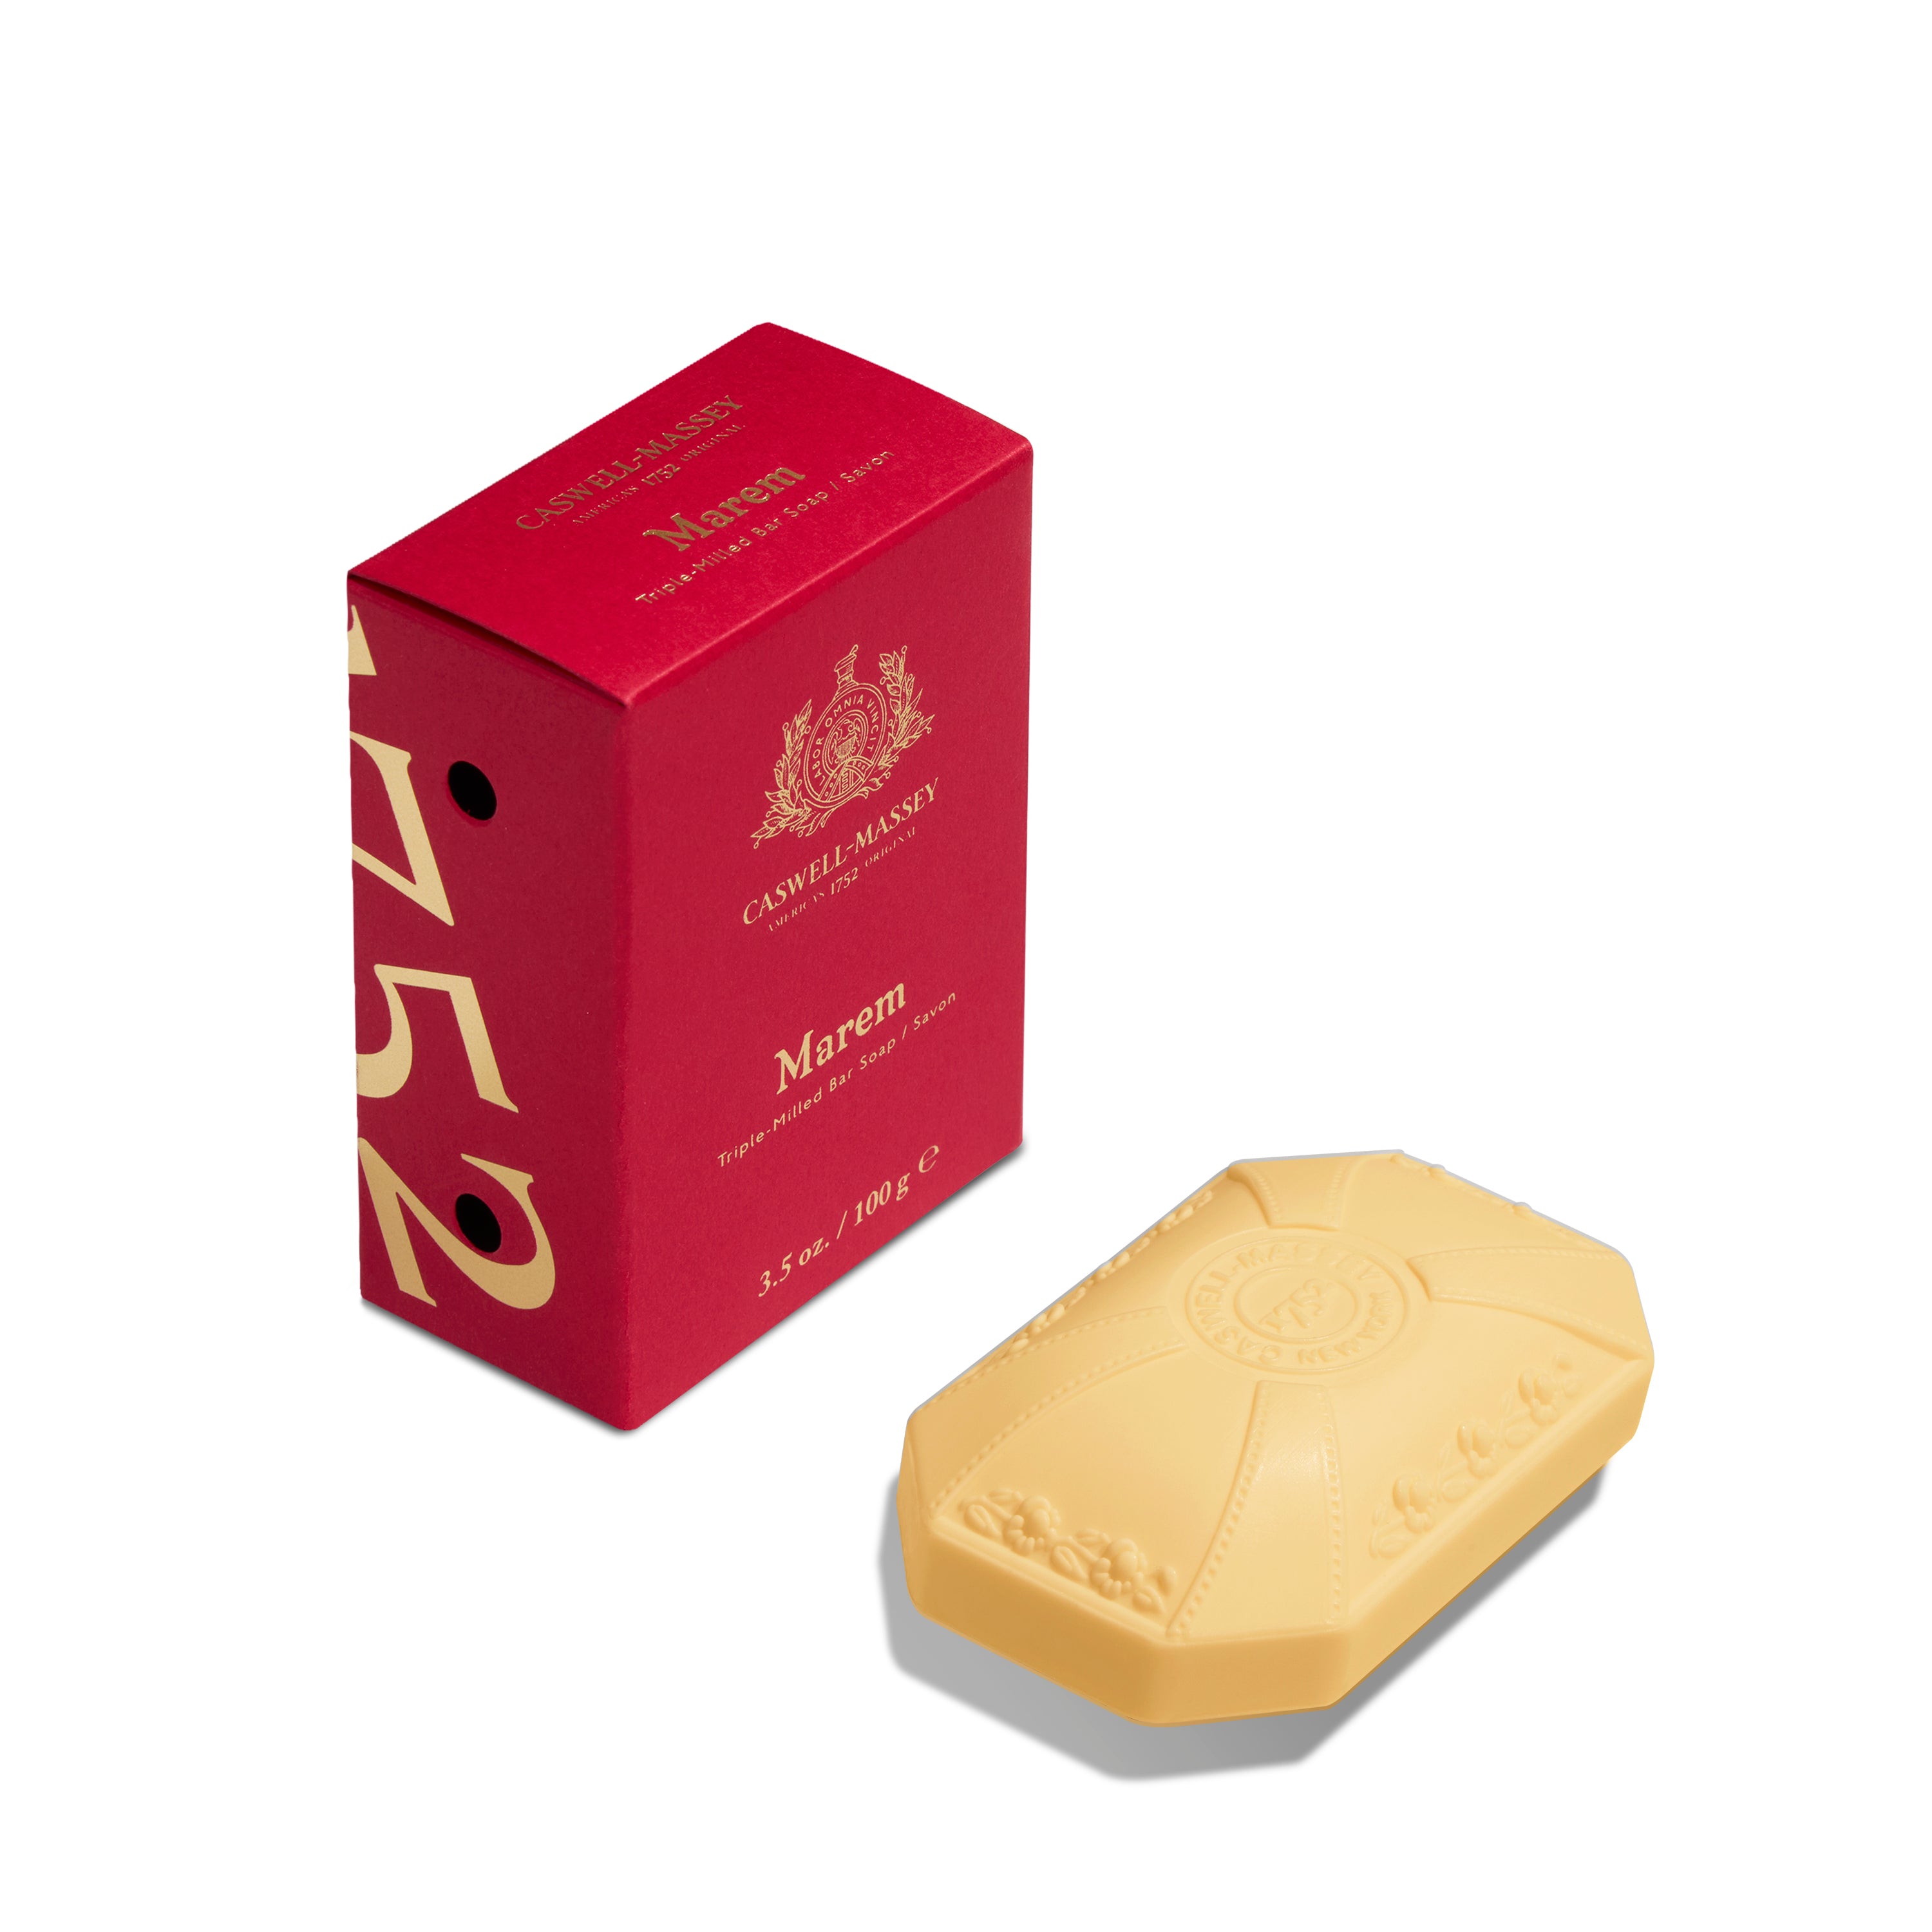 MAREM single soap packshot soap with red carton